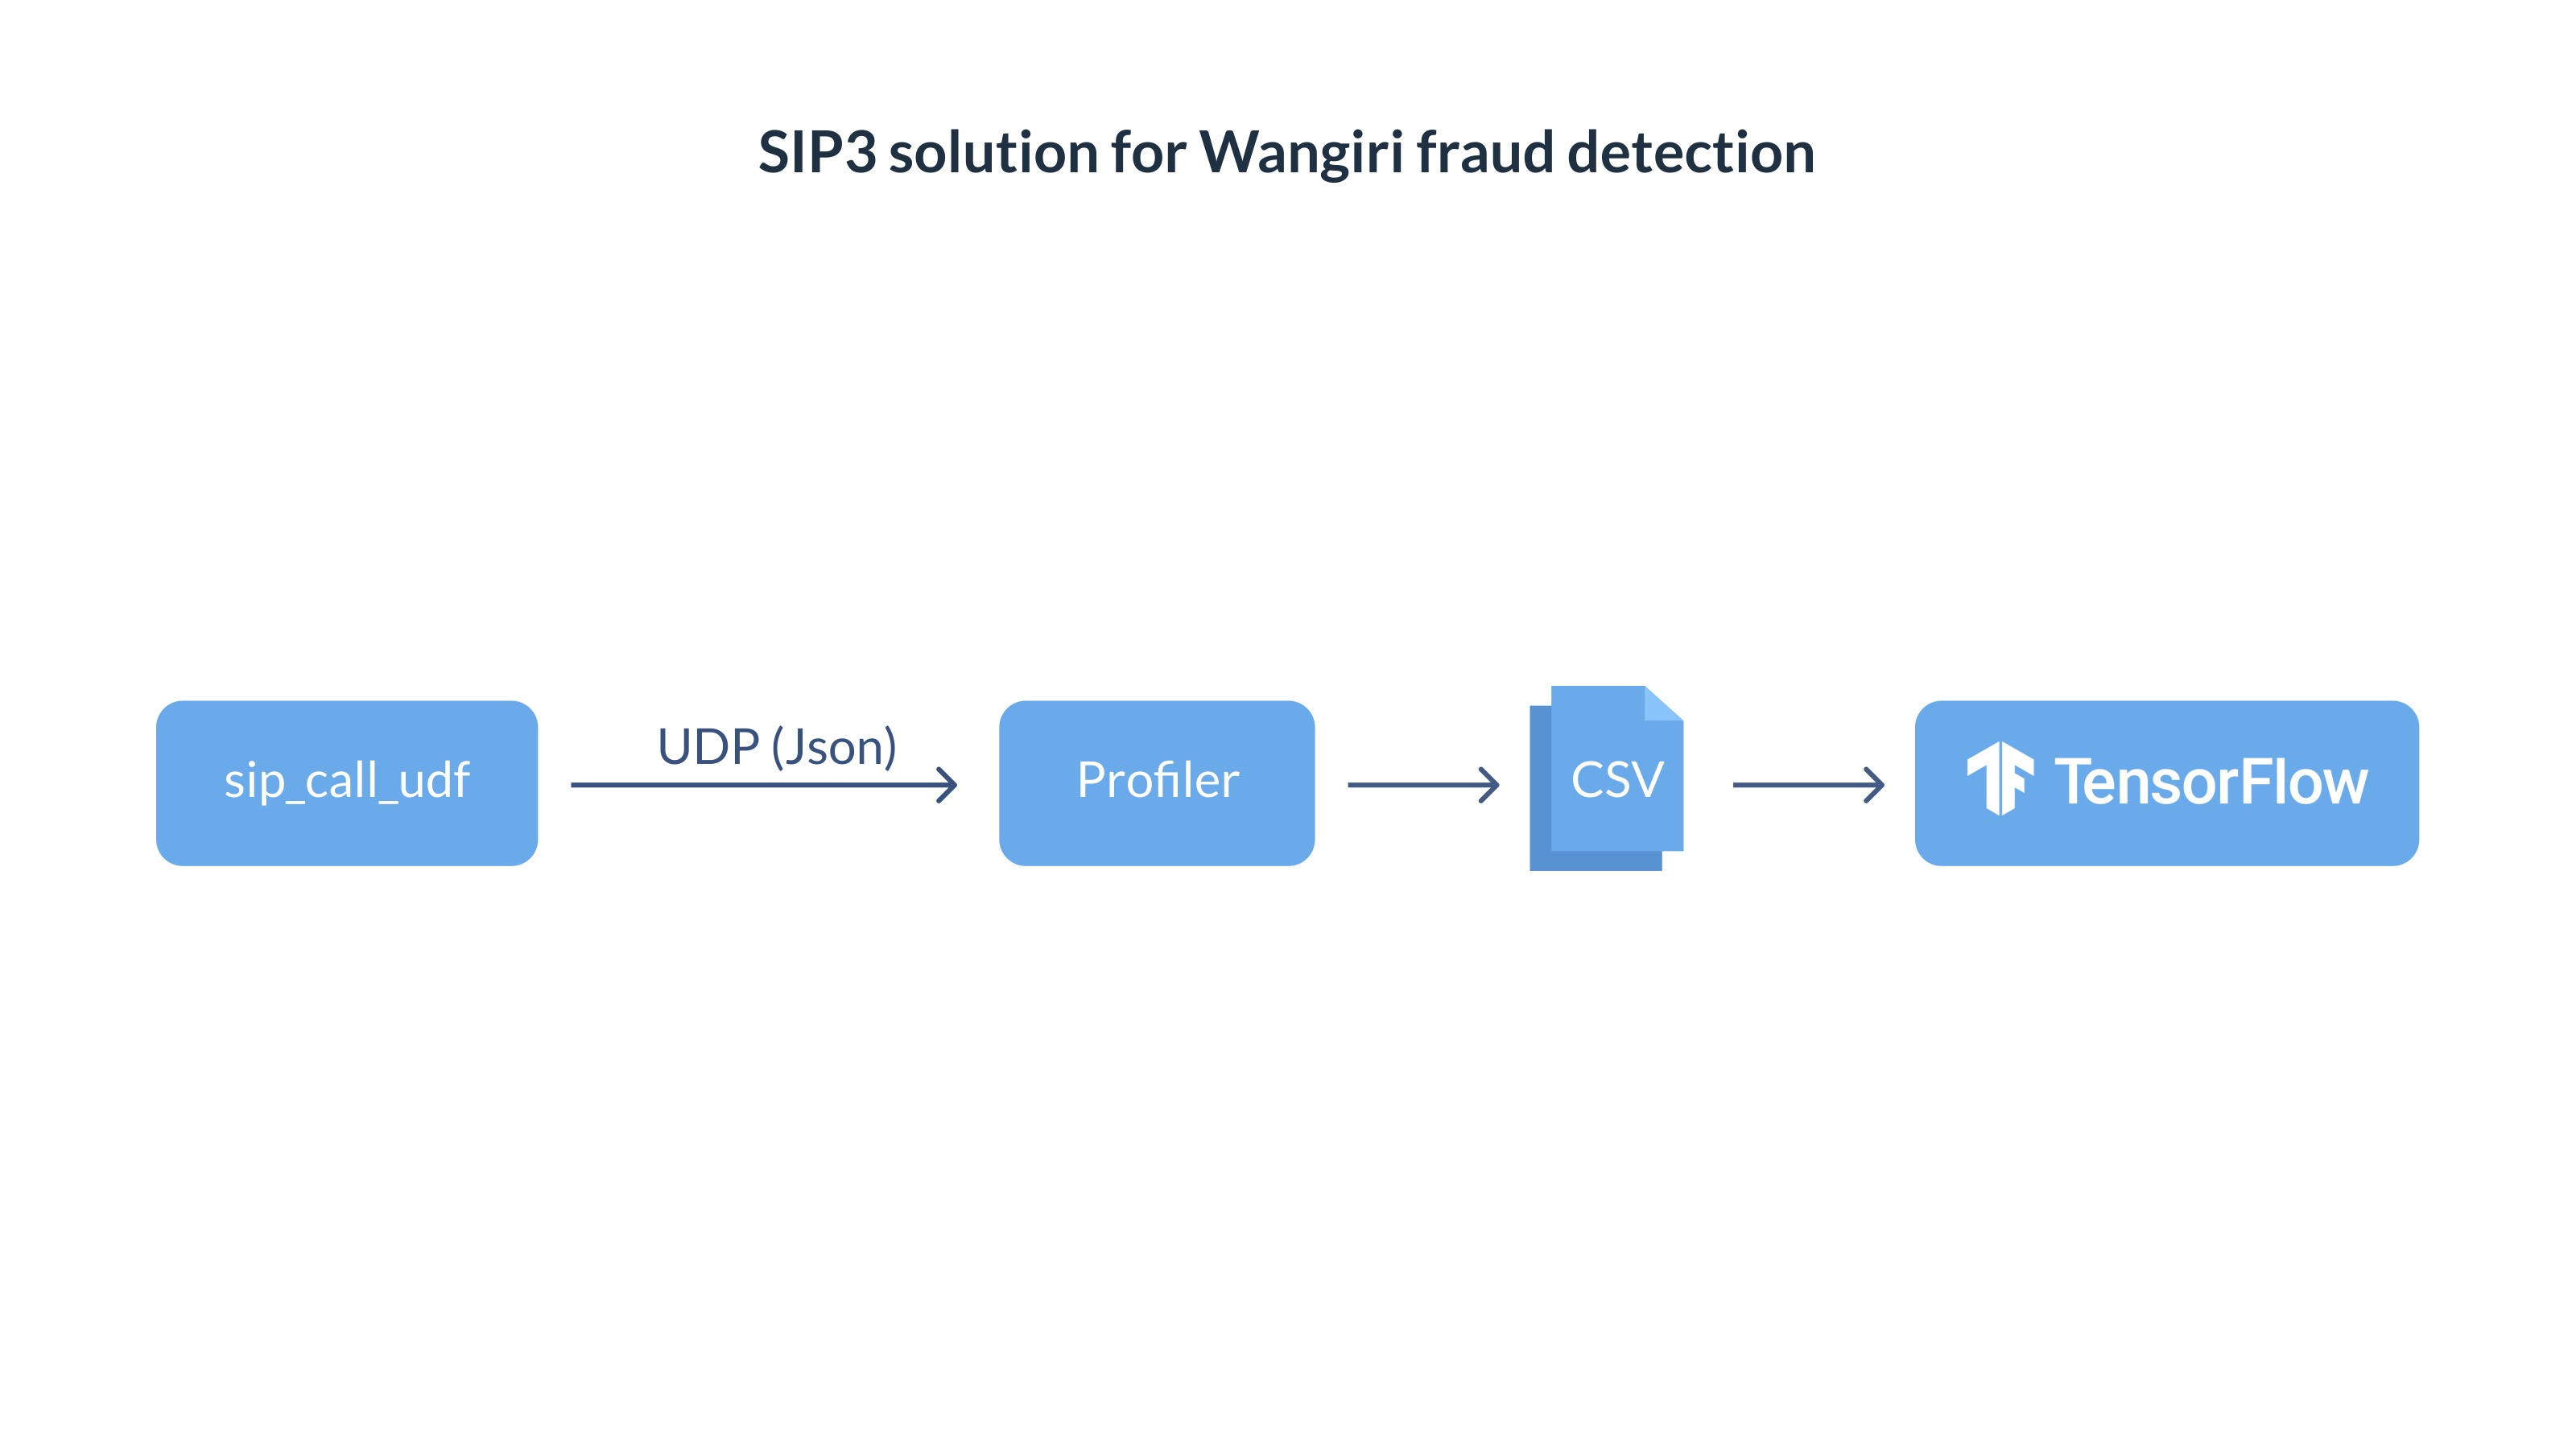 Wangiri Fraud Detection Solution Architecture